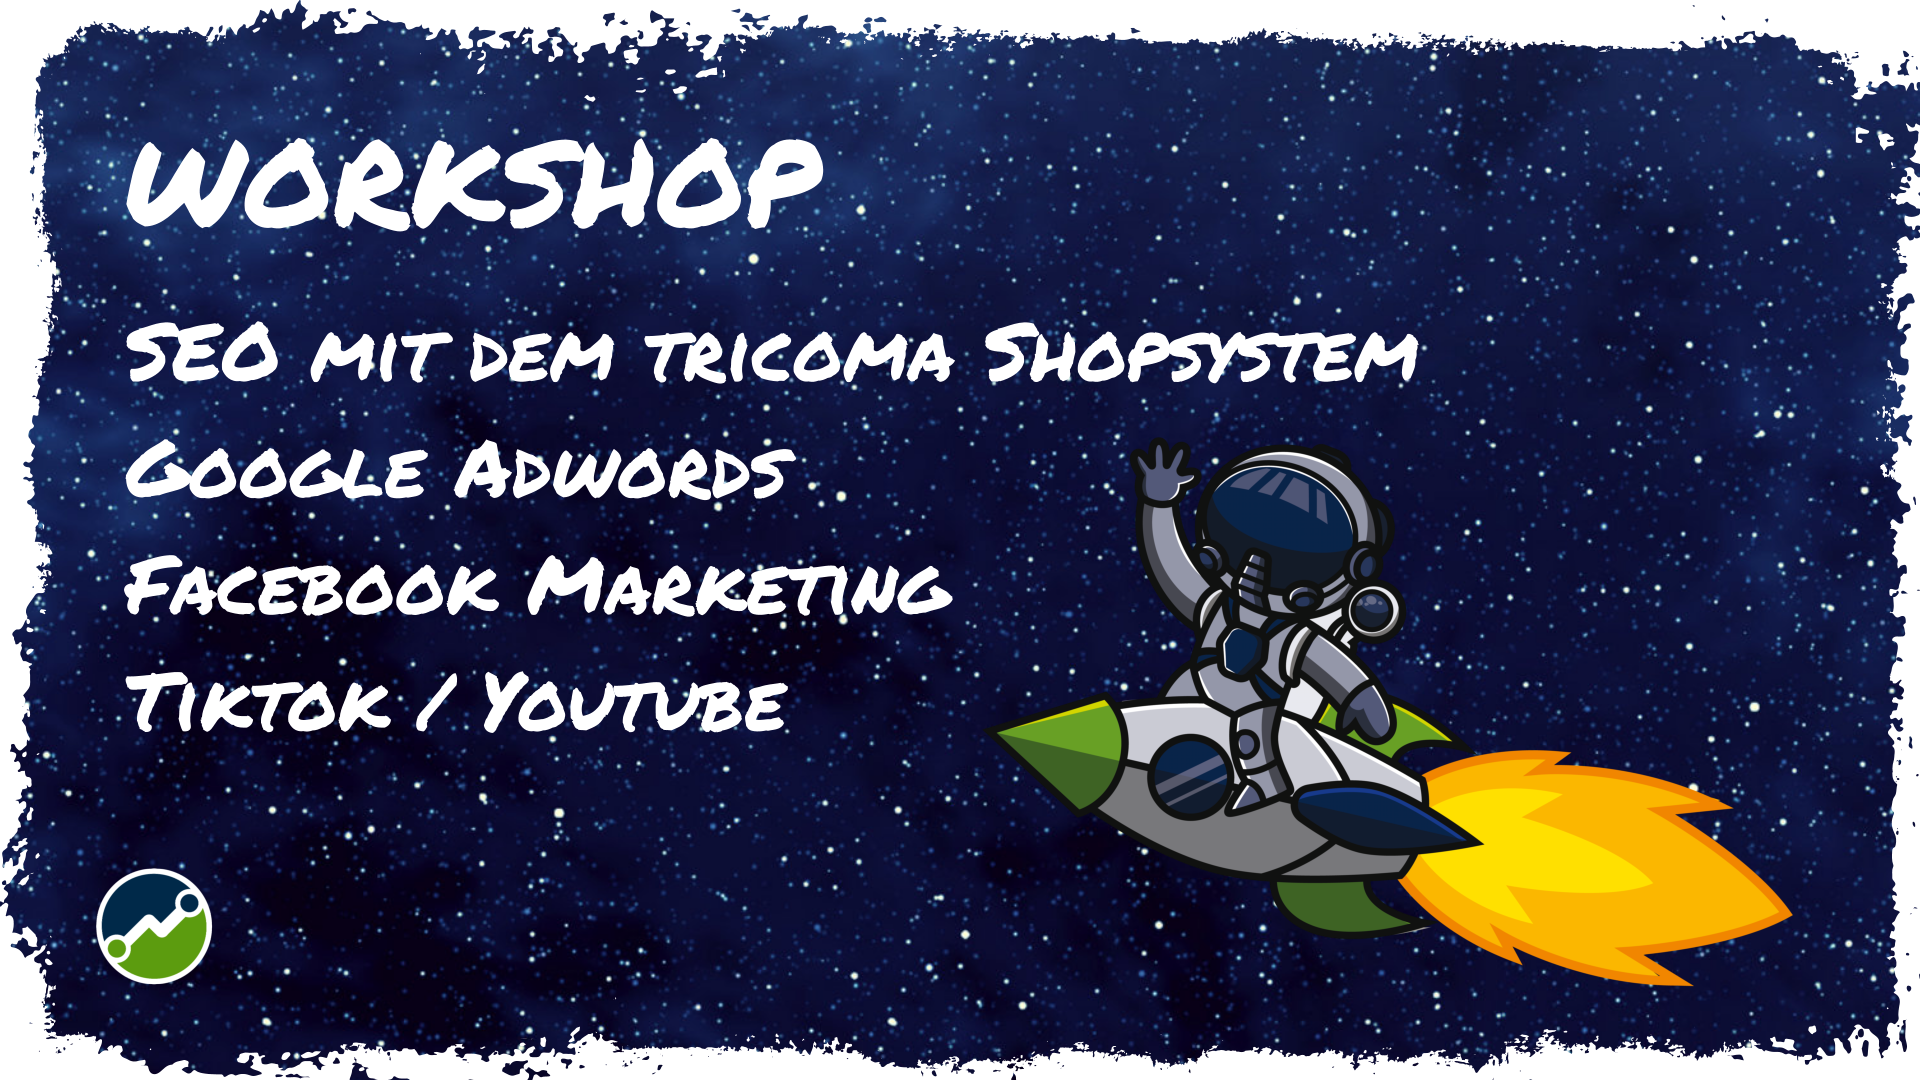 Workshop - Marketing mit dem tricoma Shopsystem (25.03.22)